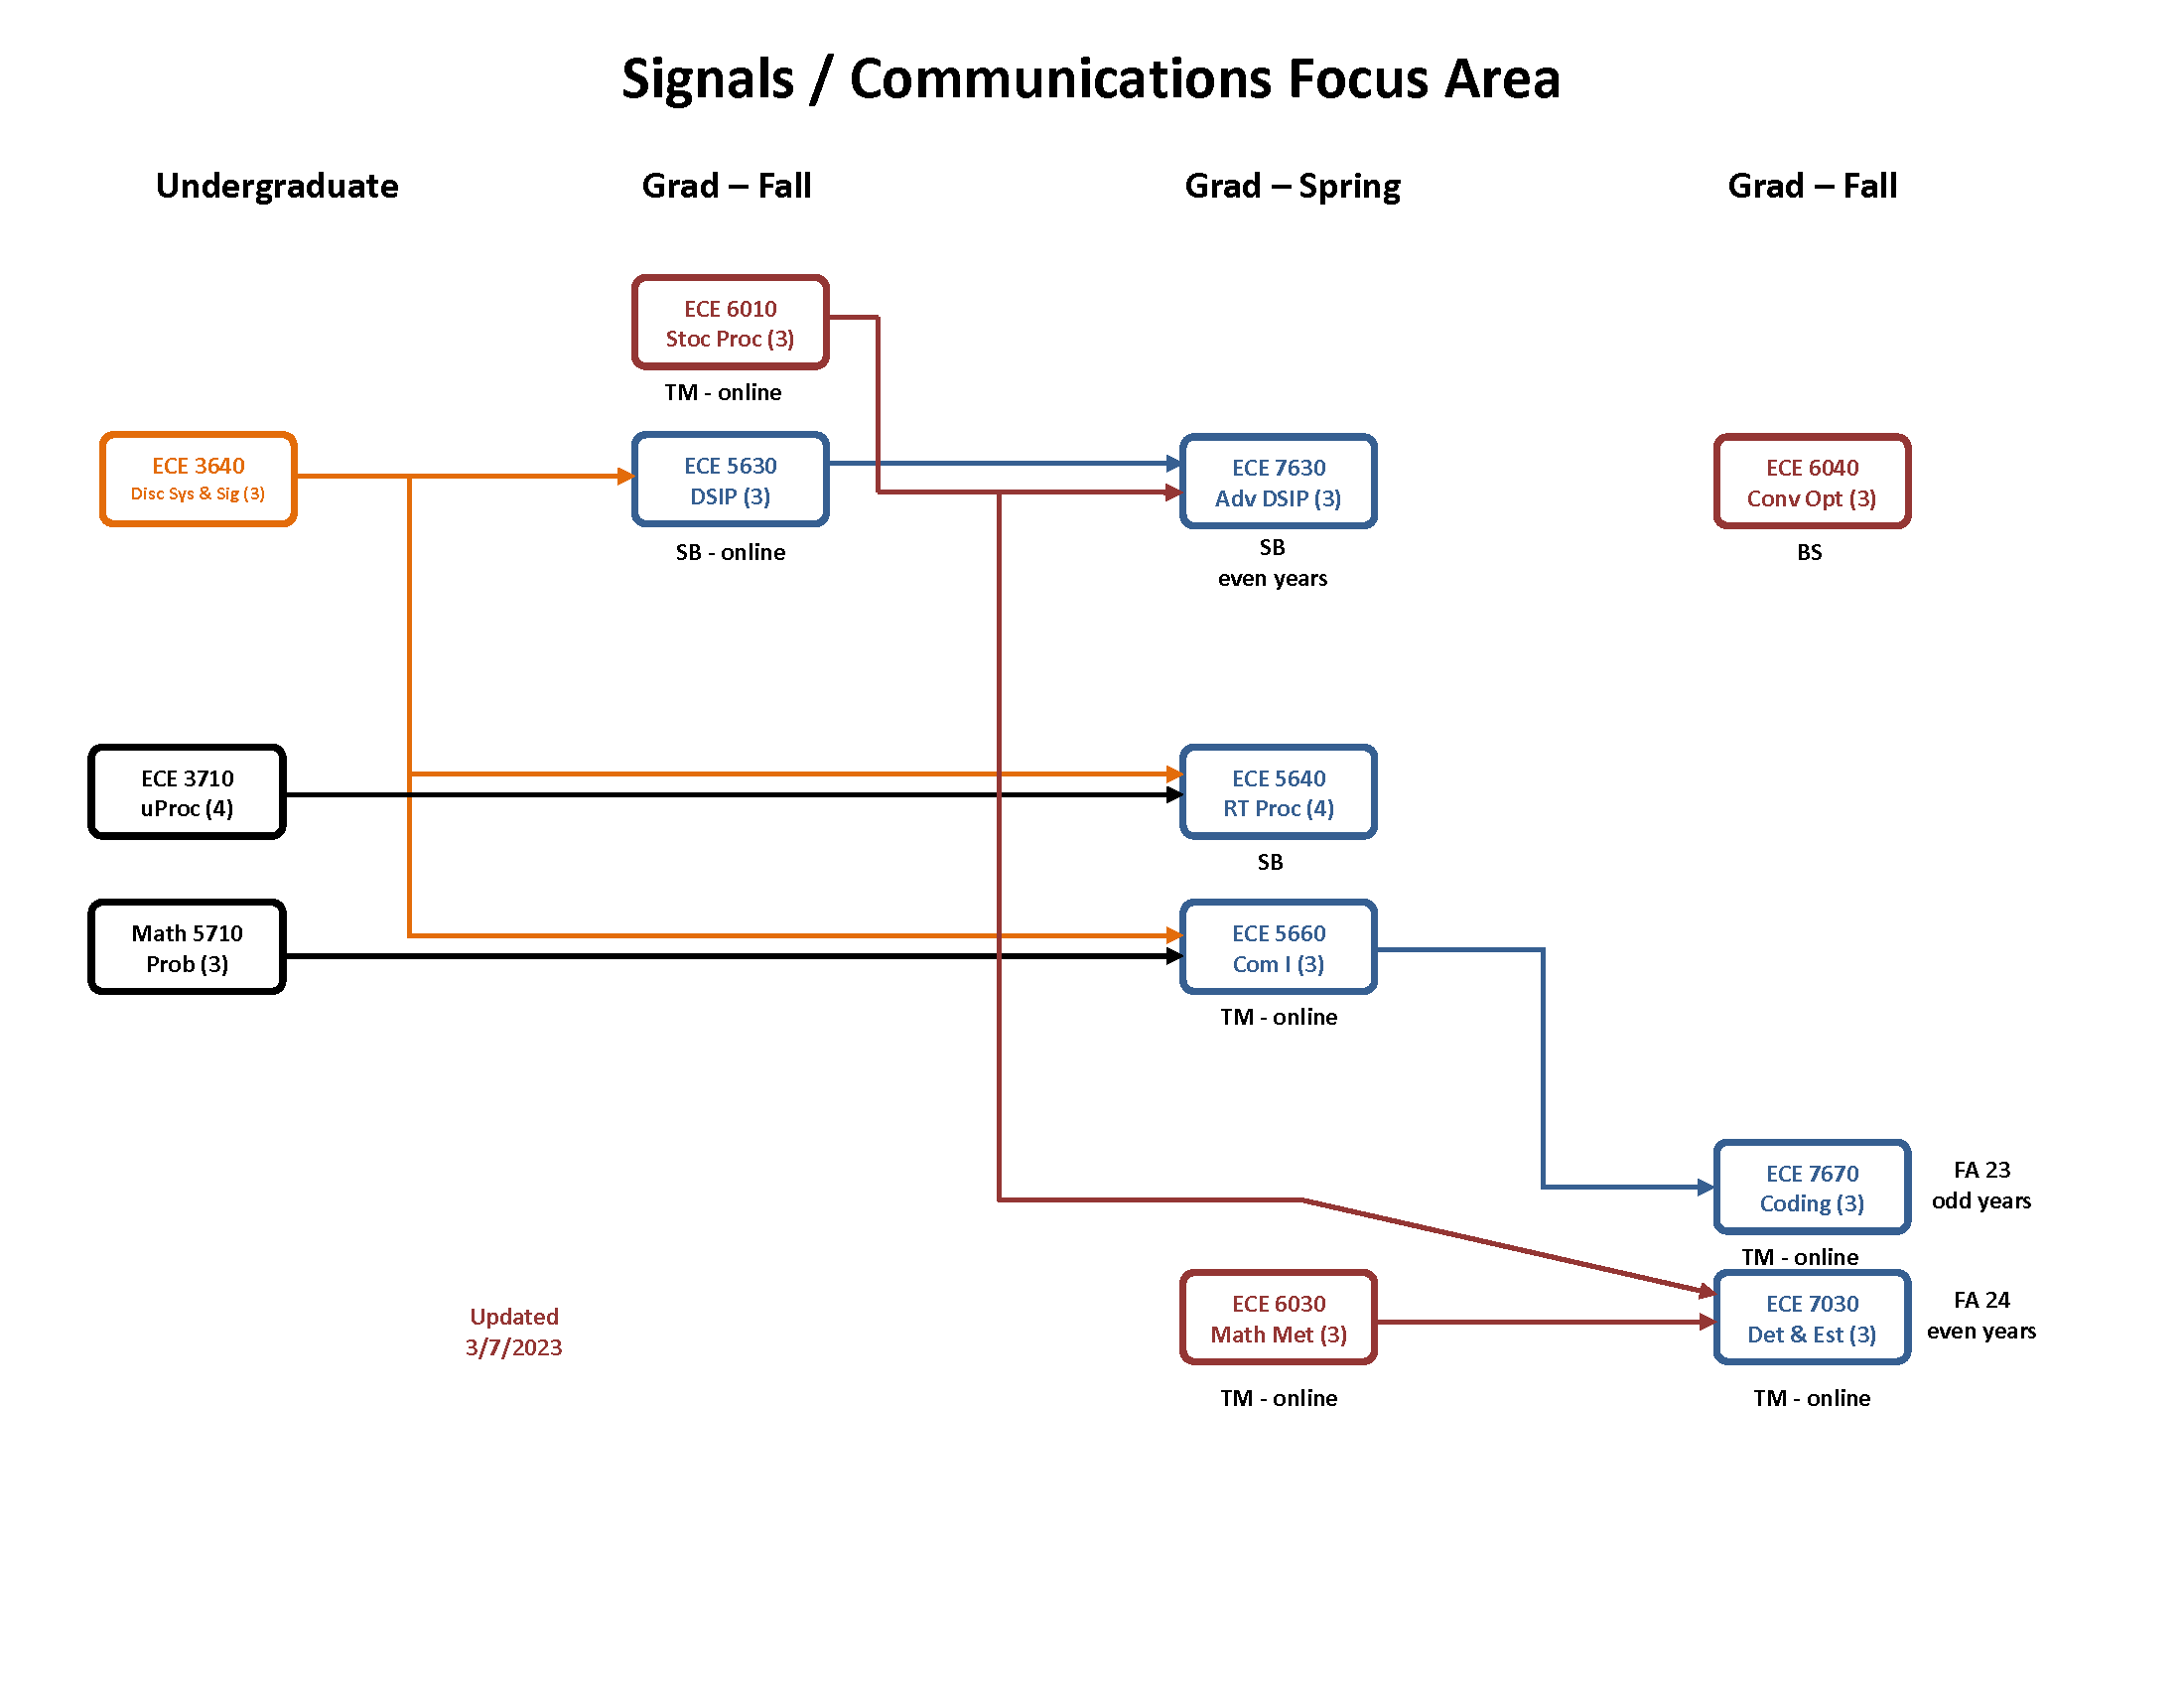 Signals / Communications Focus Area flow chart